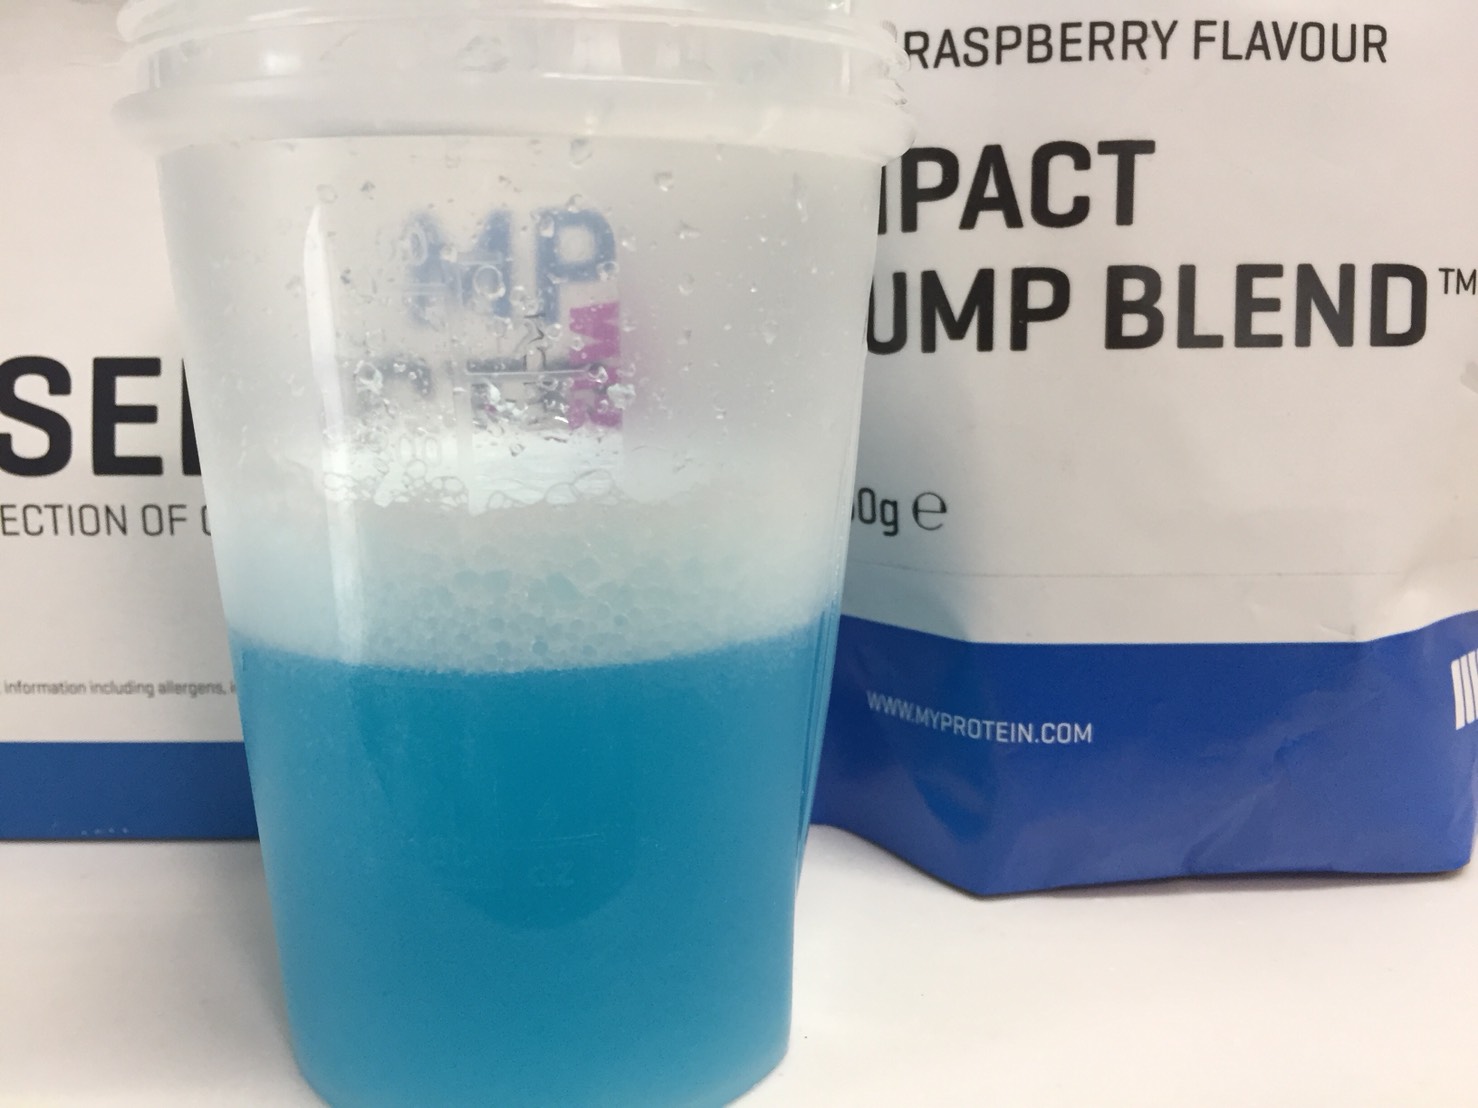 IMPACTパンプブレンド「BLUE RASPBERRY FLAVOUR（ブルーラズベリー味）」を横から撮影した様子がこちら。